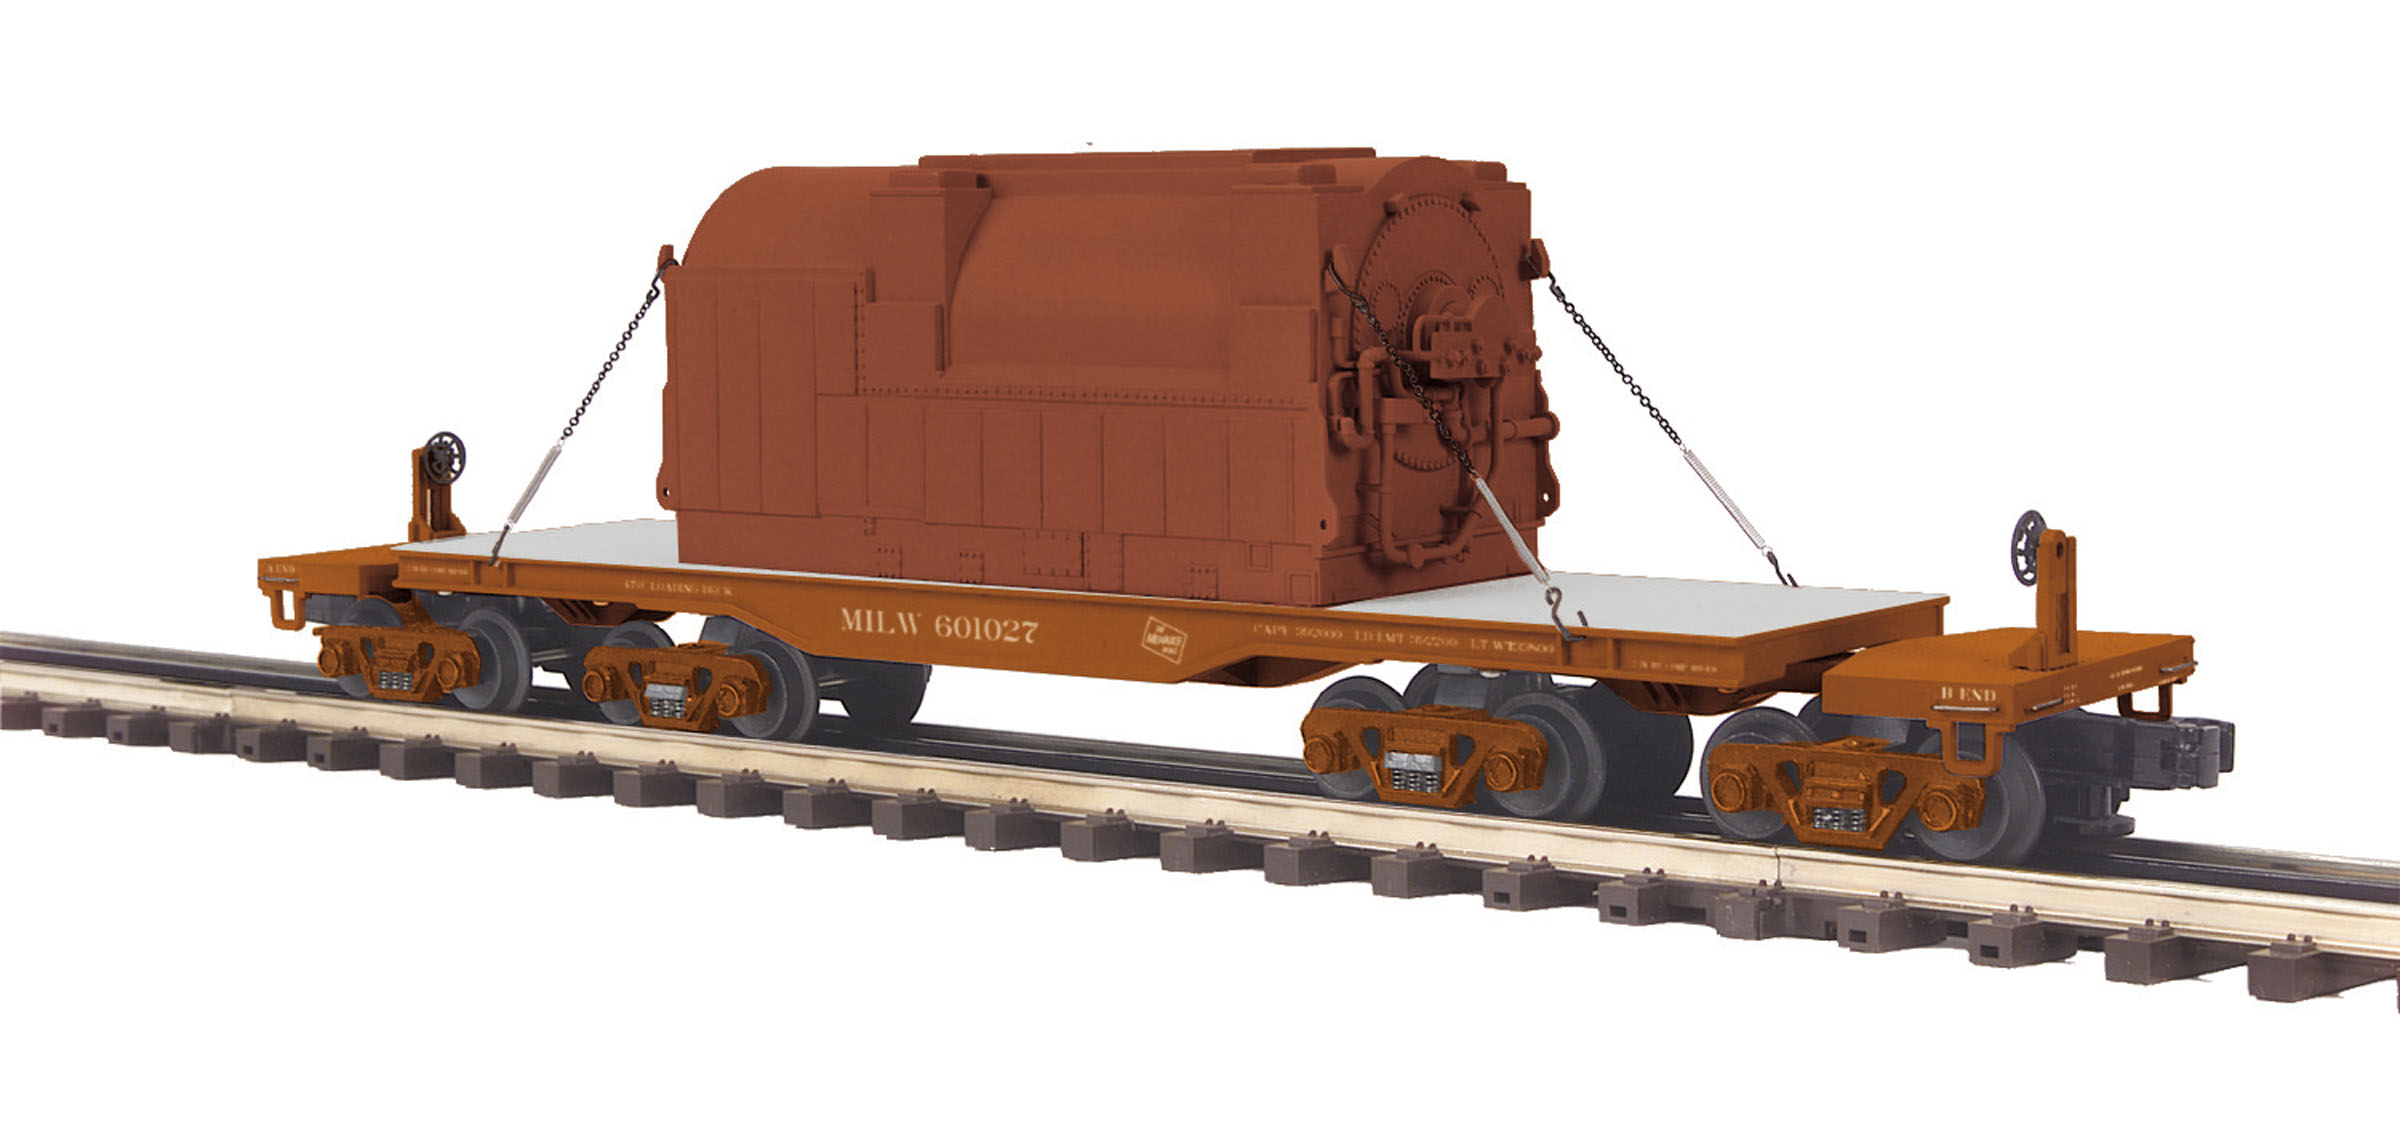 Details about   O SCALE TRAIN TRACK BULKHEAD  FLAT CAR ATLAS LIONEL MTH INTERMOUNTAN LOAD.4-PK 